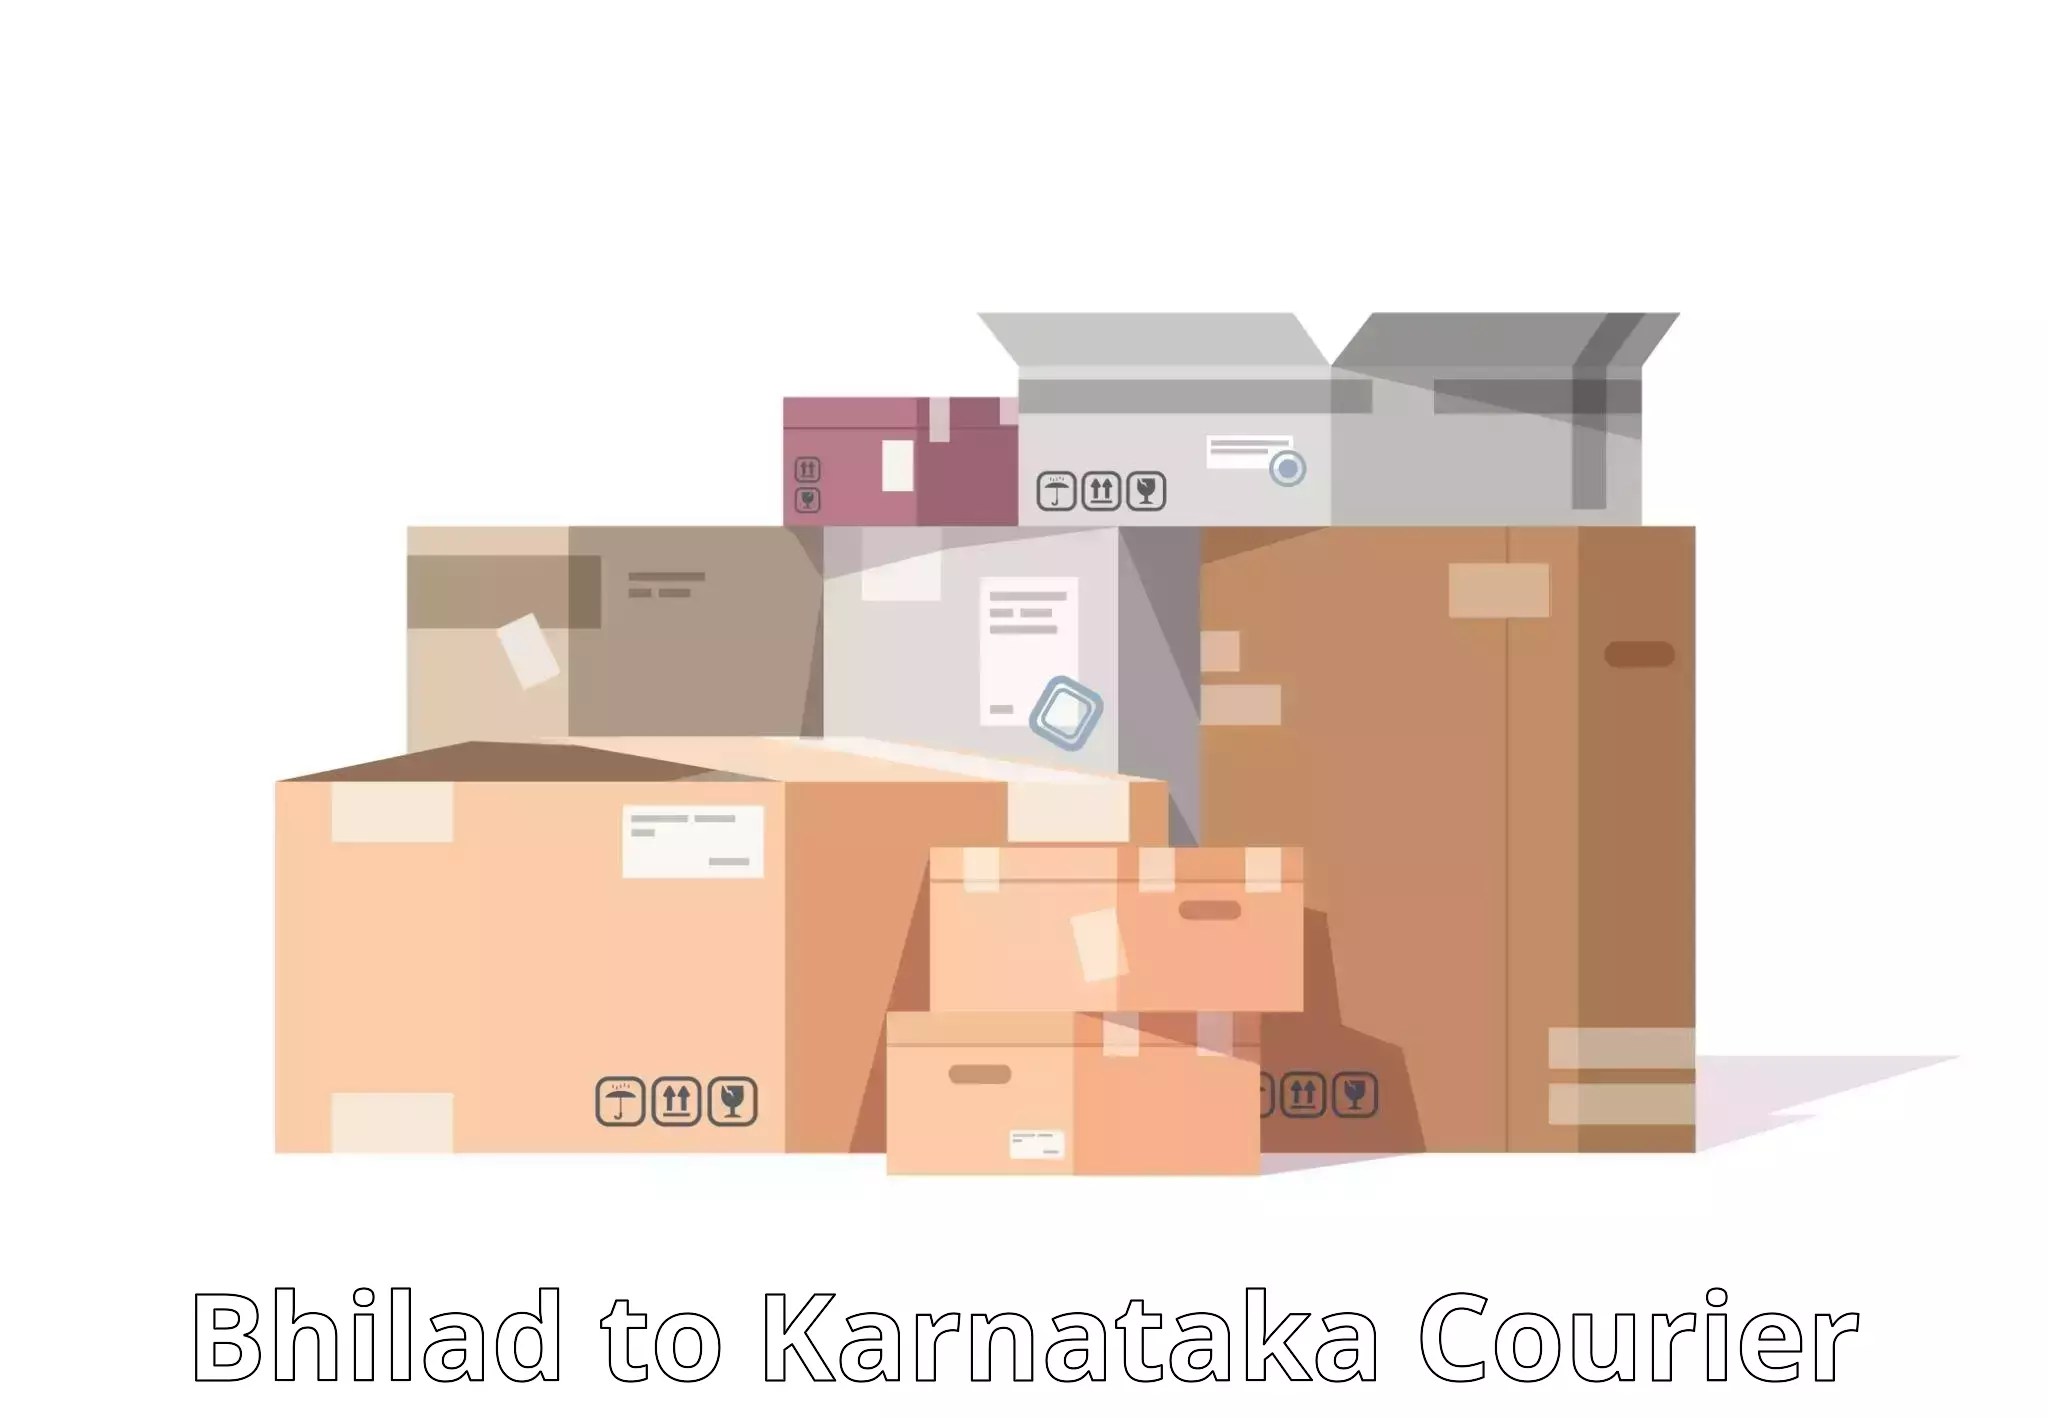 Courier service partnerships Bhilad to Karnataka